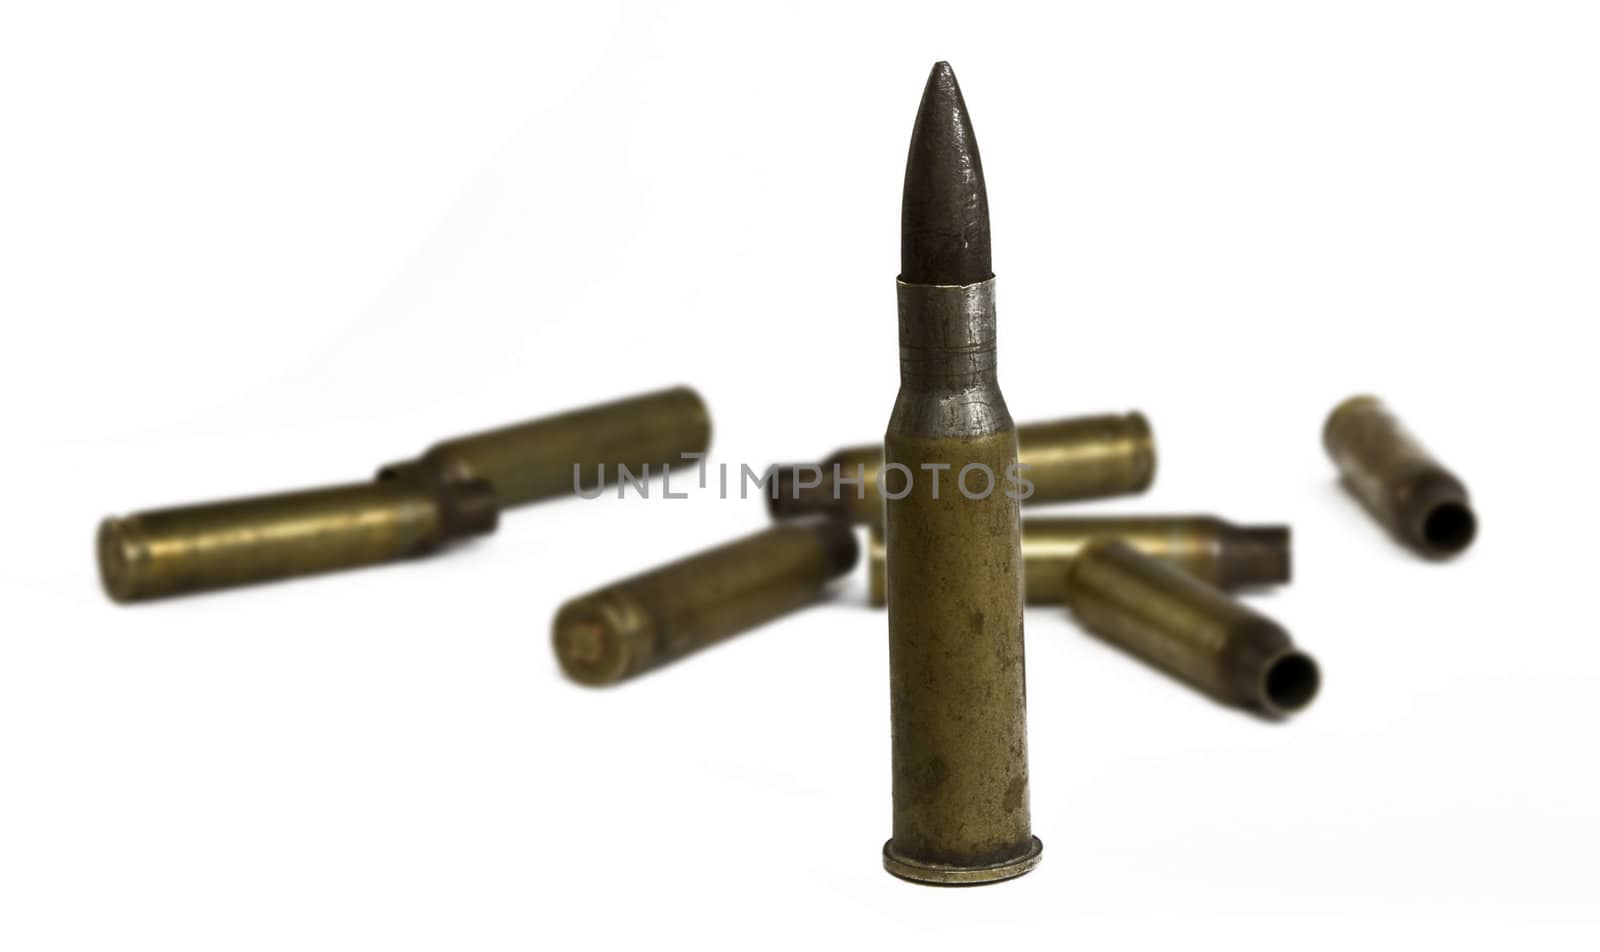 used macshine gun bullets